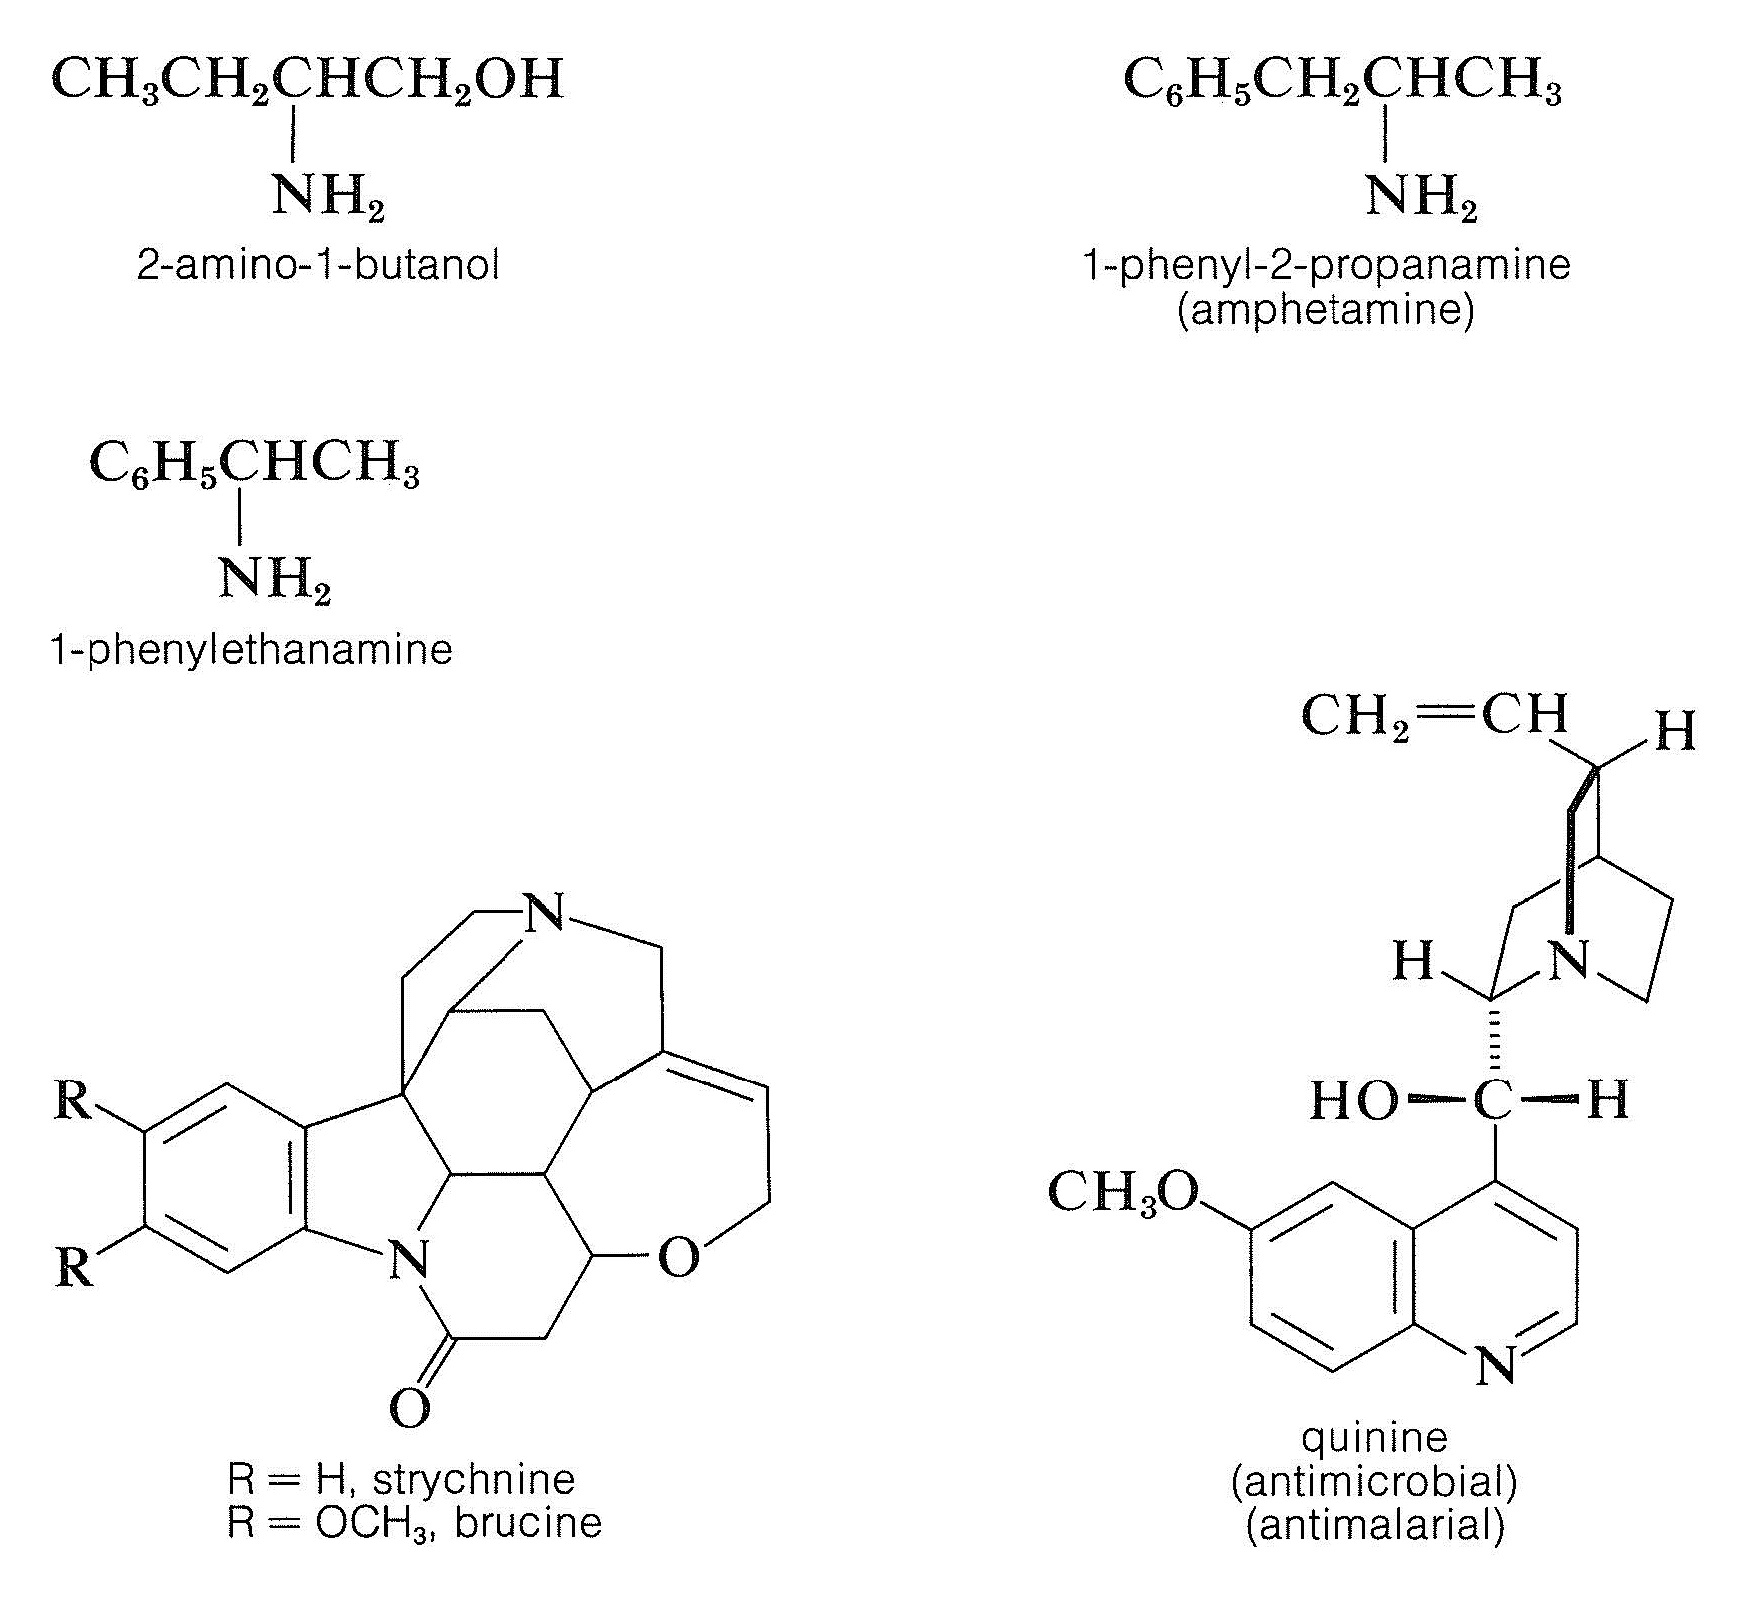 Condensed bond lin structures of 2-amino-1-butanol, 1-phenylethanamine, and 1-phenyl-2-propanamine (amphetamine). Wedge-dash structure of guinine. 